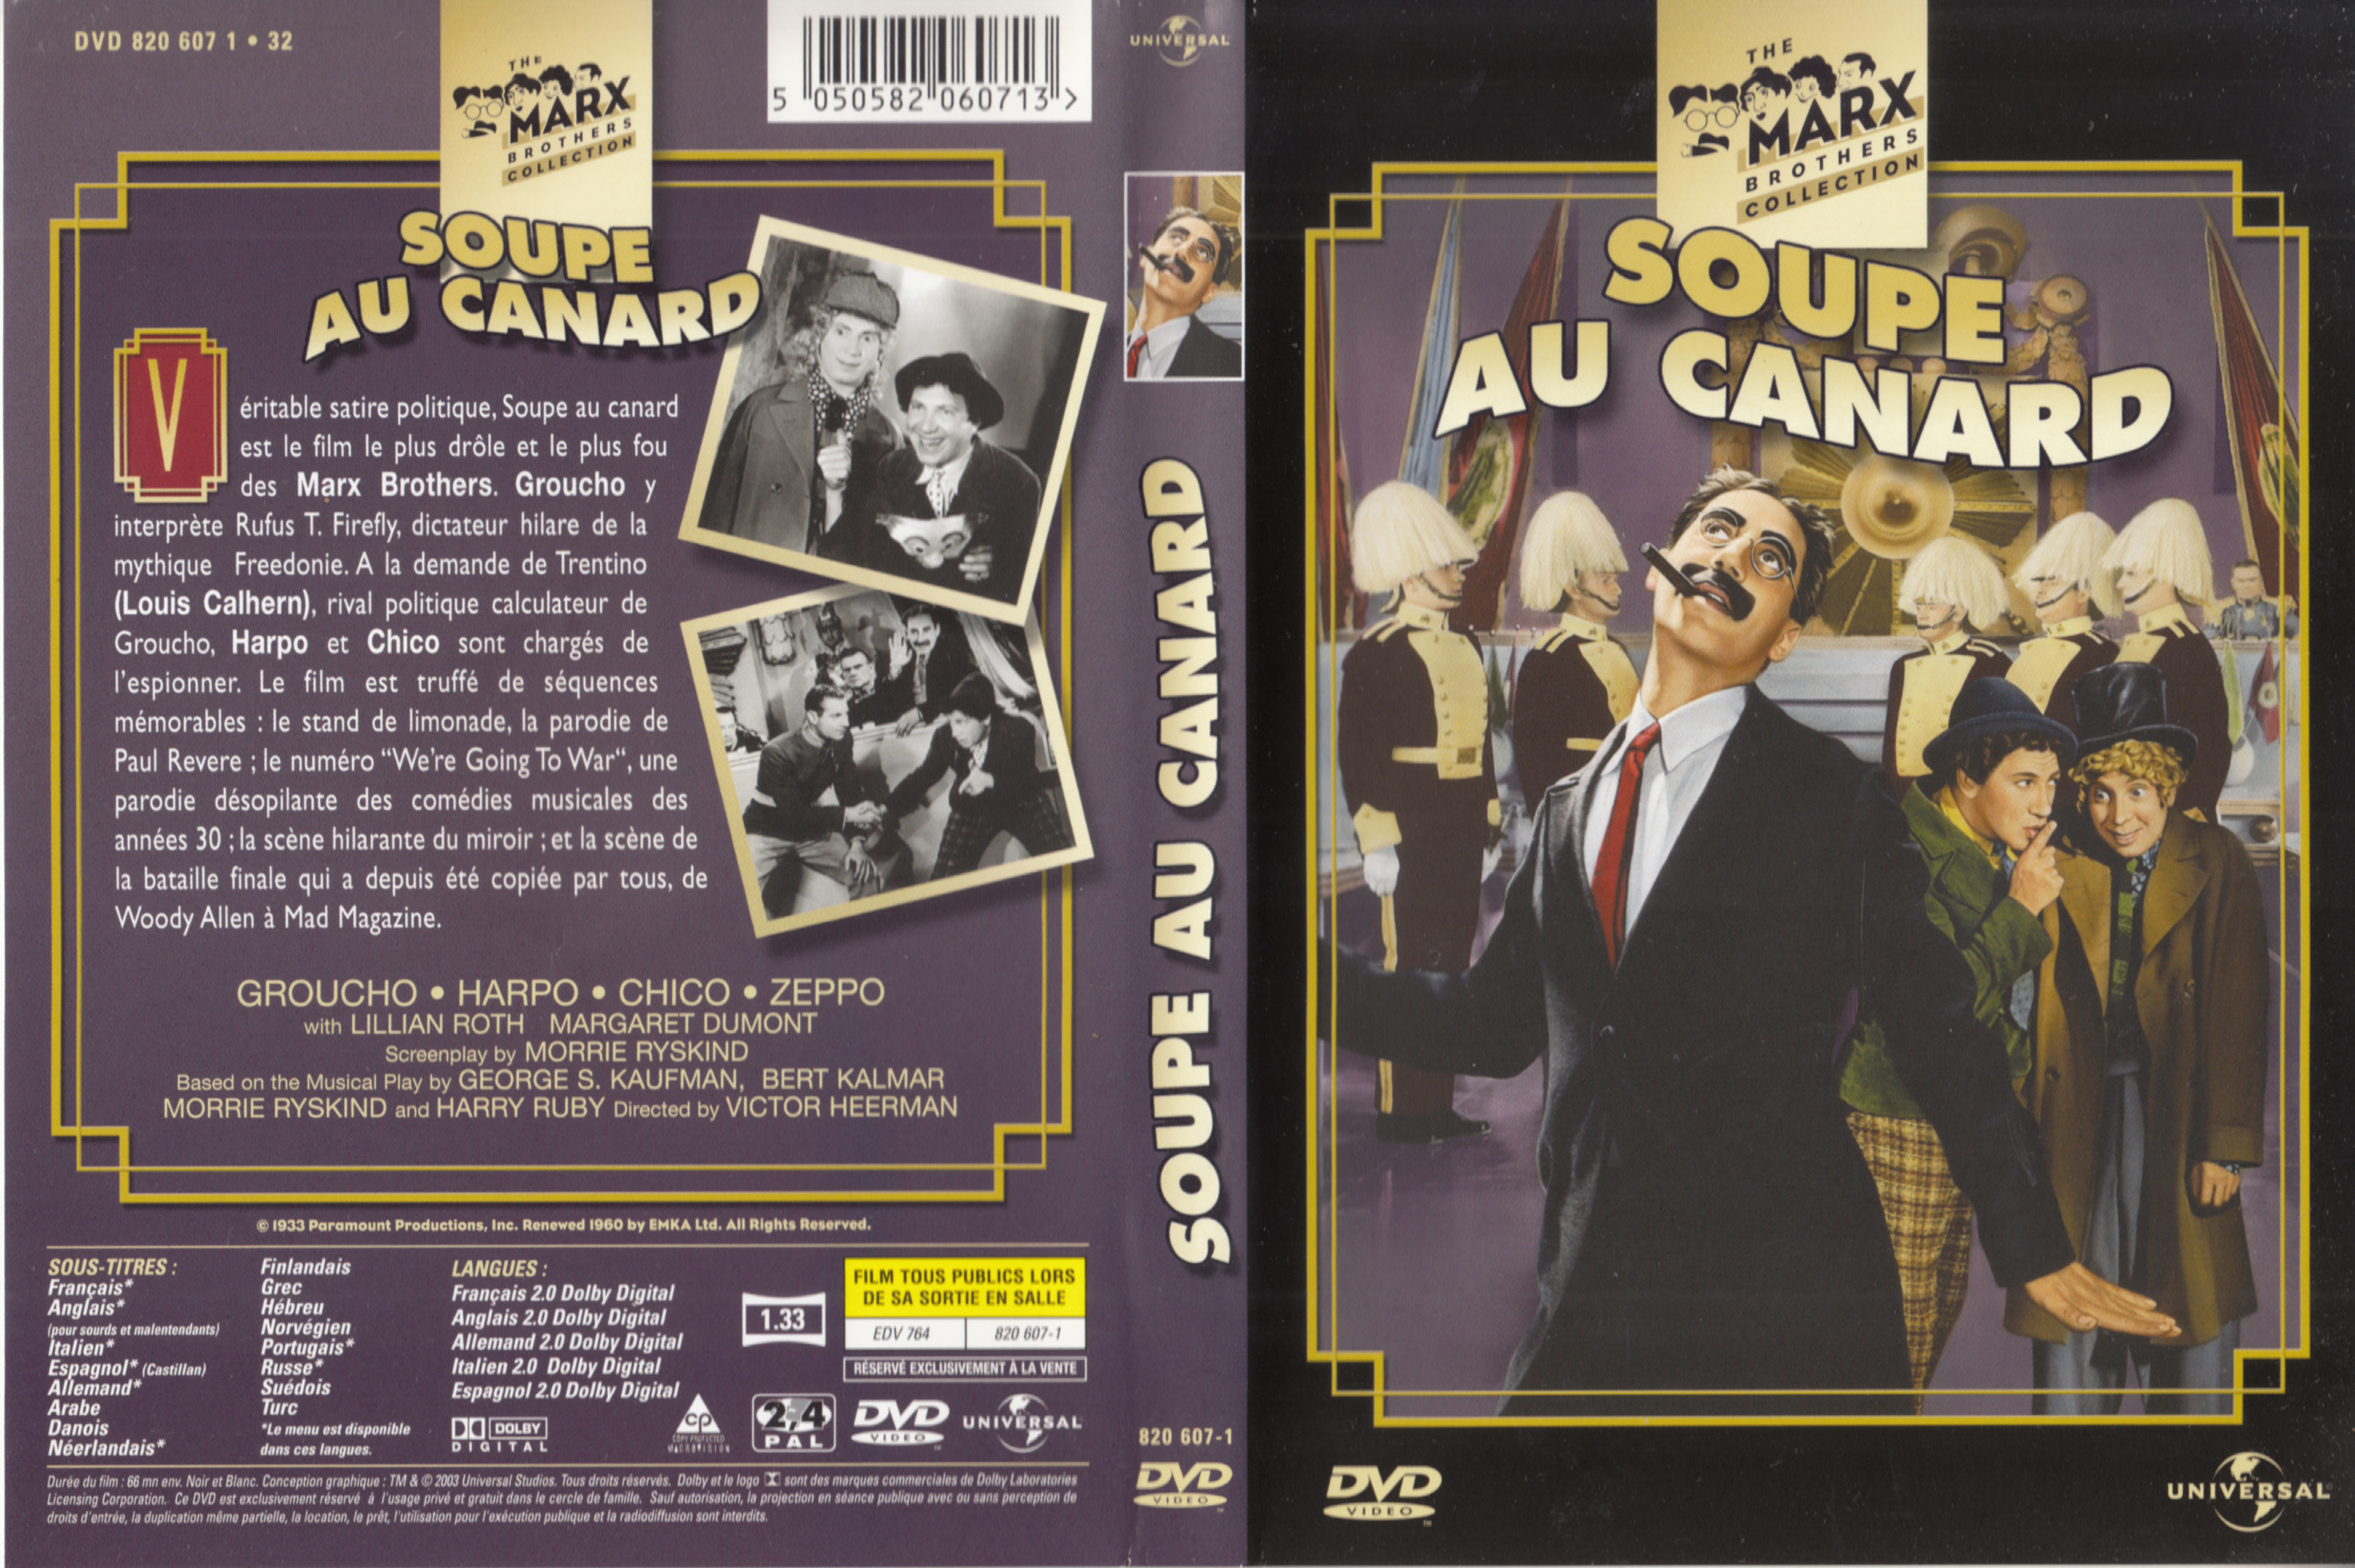 Jaquette DVD Soupe au canard